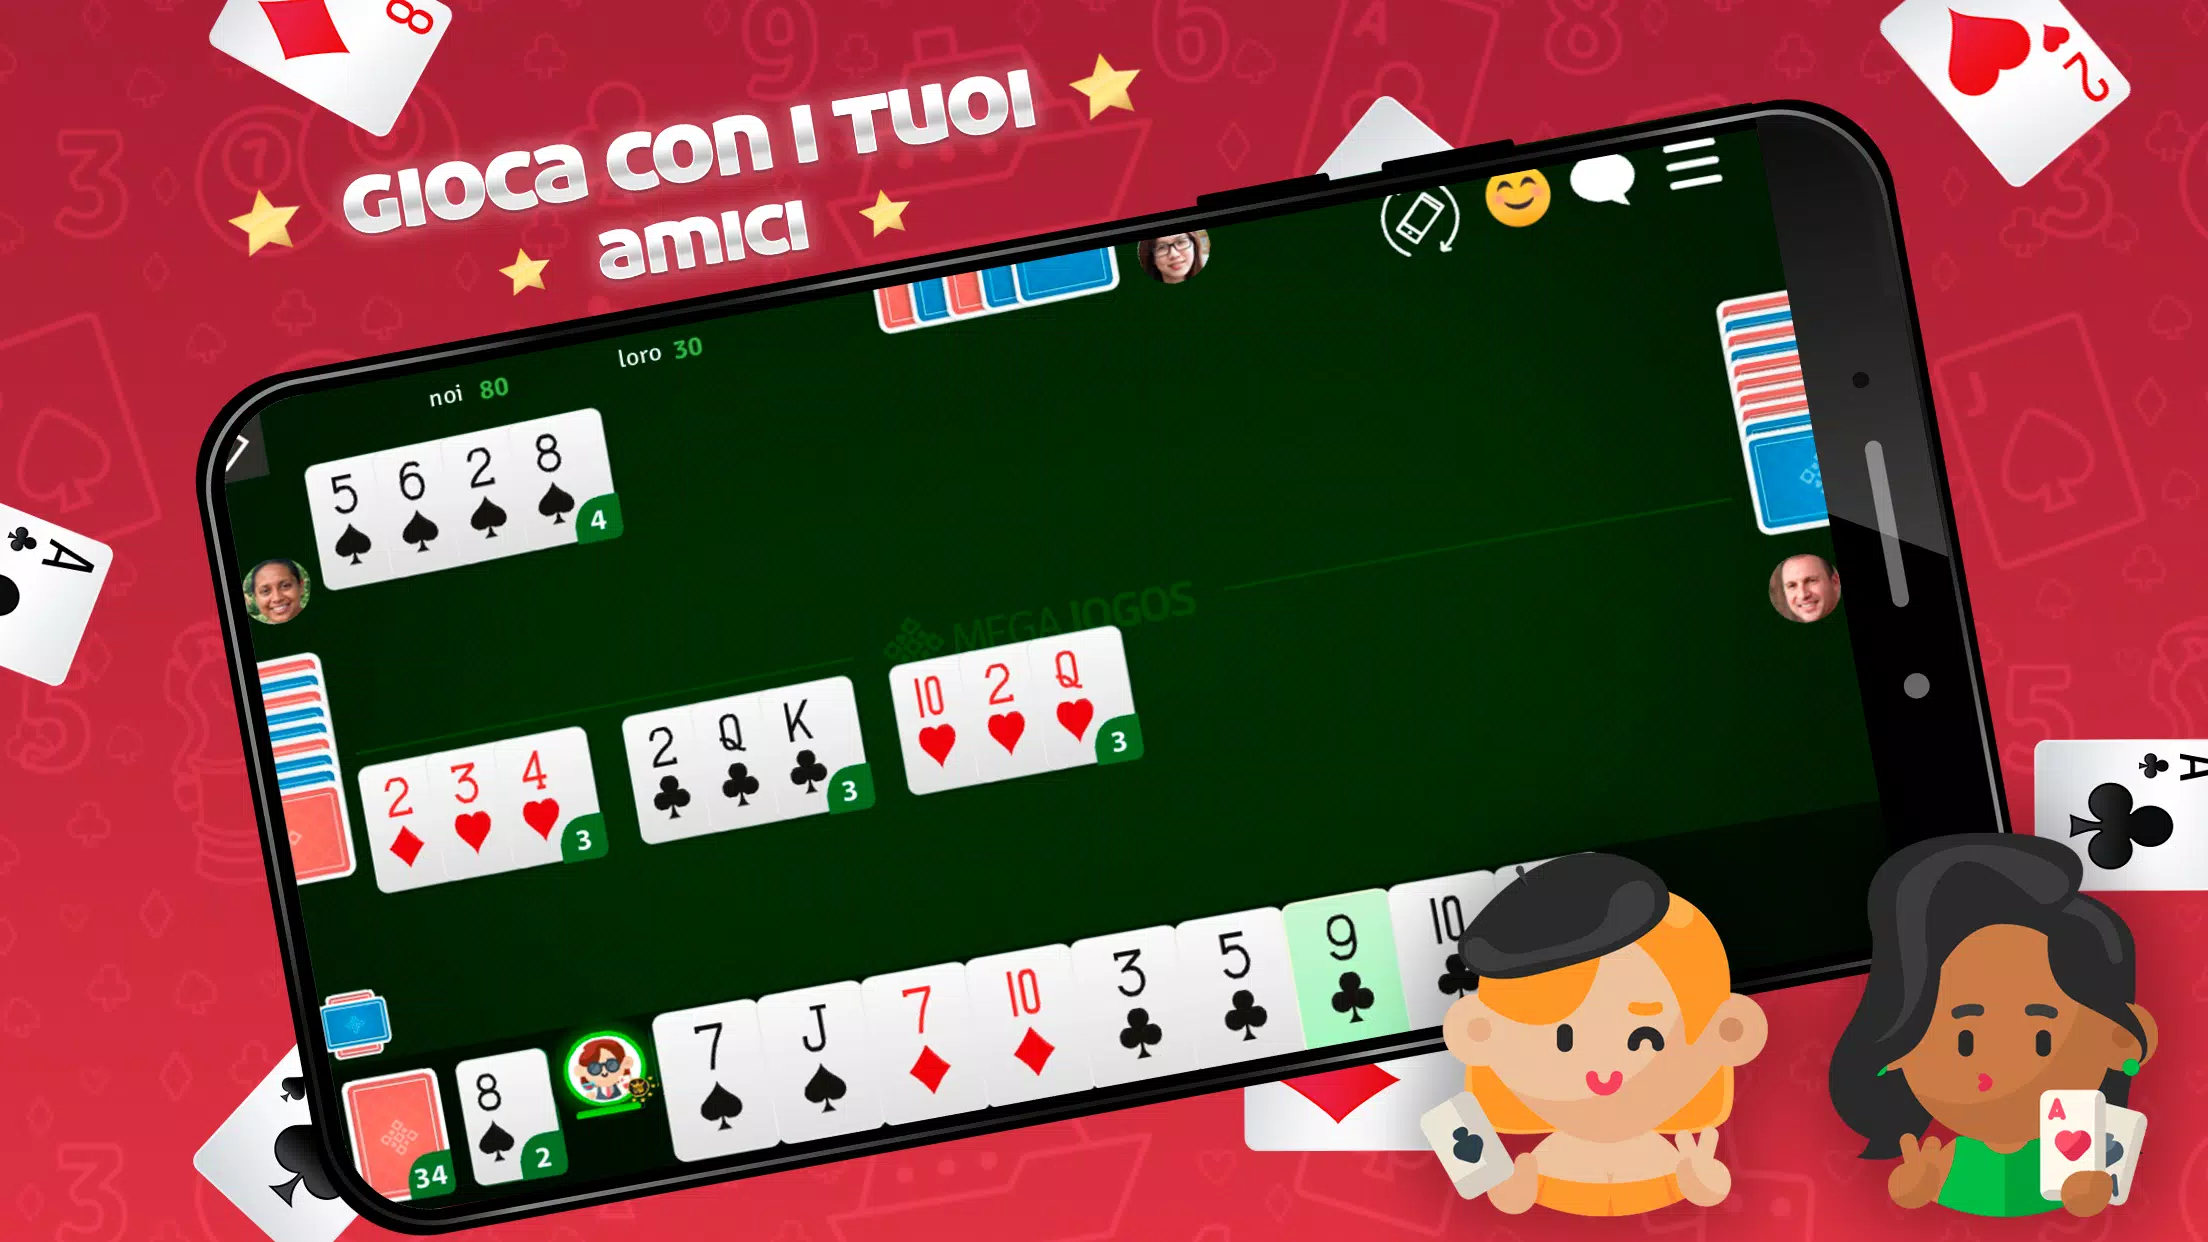 Burraco Online Jogatina: Carte Gratis Italiano for Android - Download